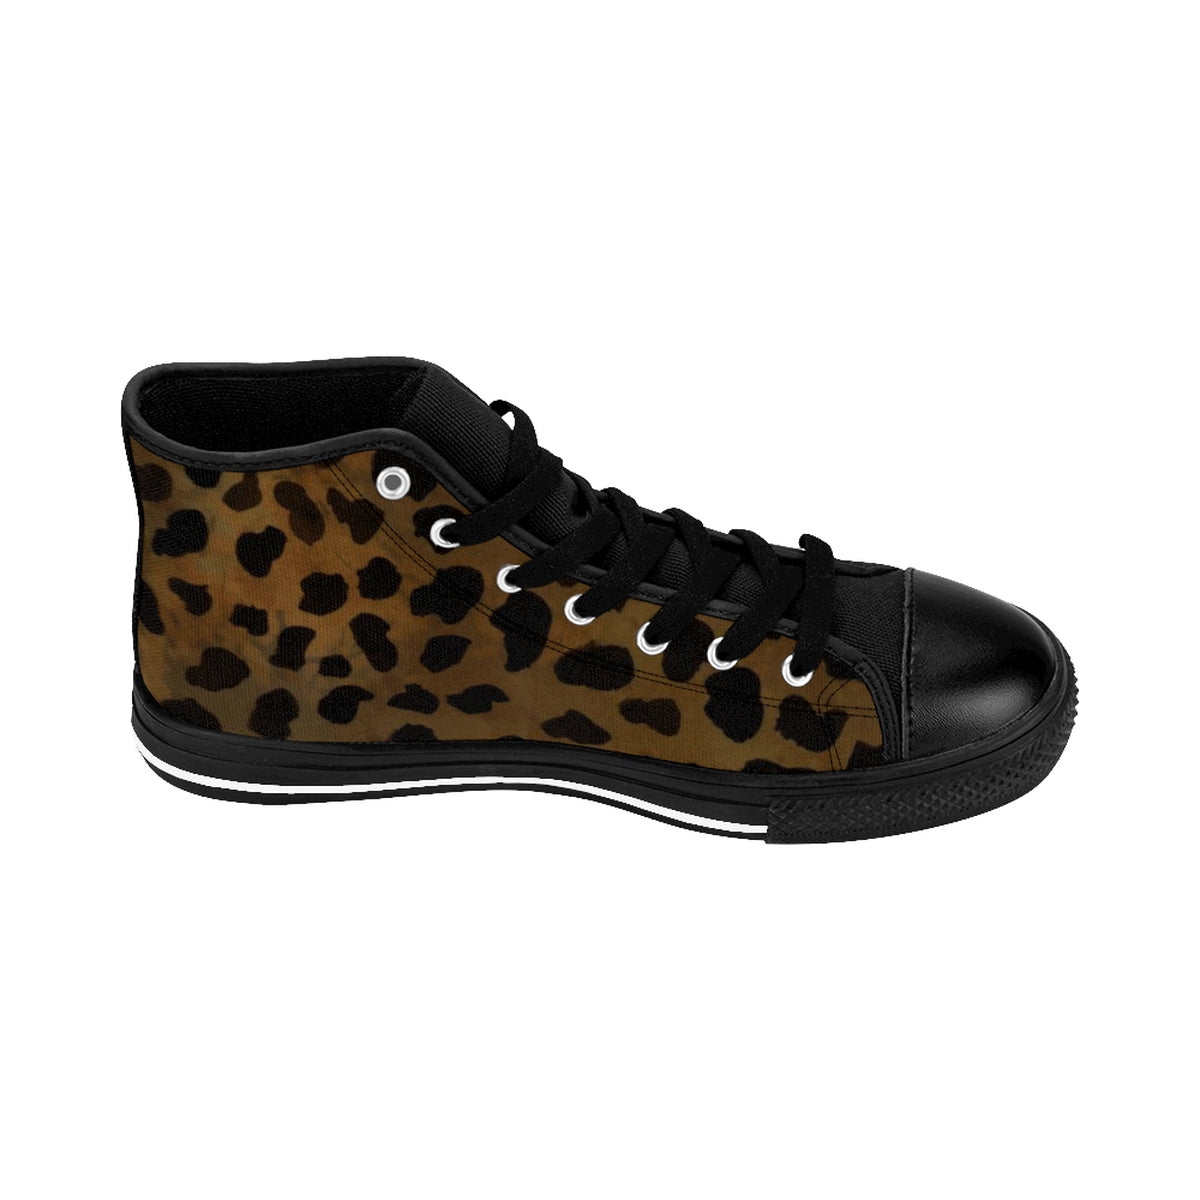 Brown Cheetah Women's Sneakers, Leopard Animal Print High-top Fashion ...